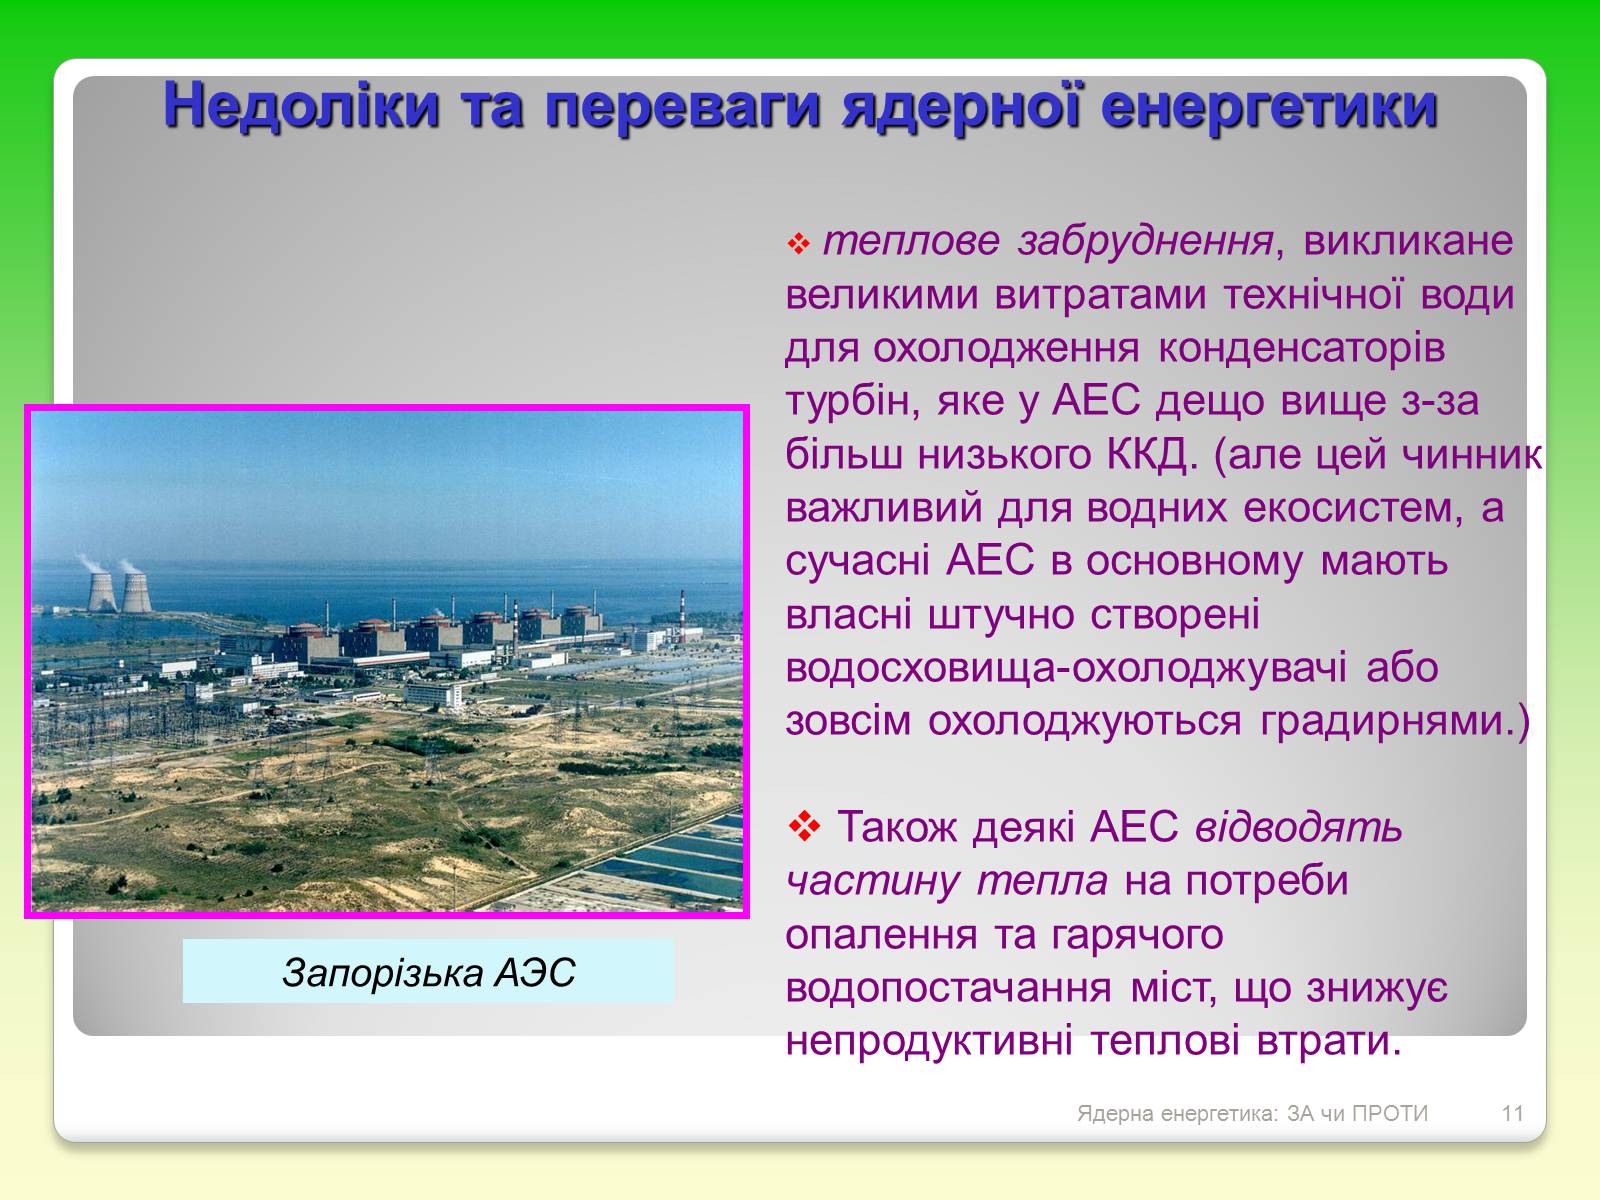 Презентація на тему «Ядерна енергетика: ЗА чи ПРОТИ» - Слайд #11